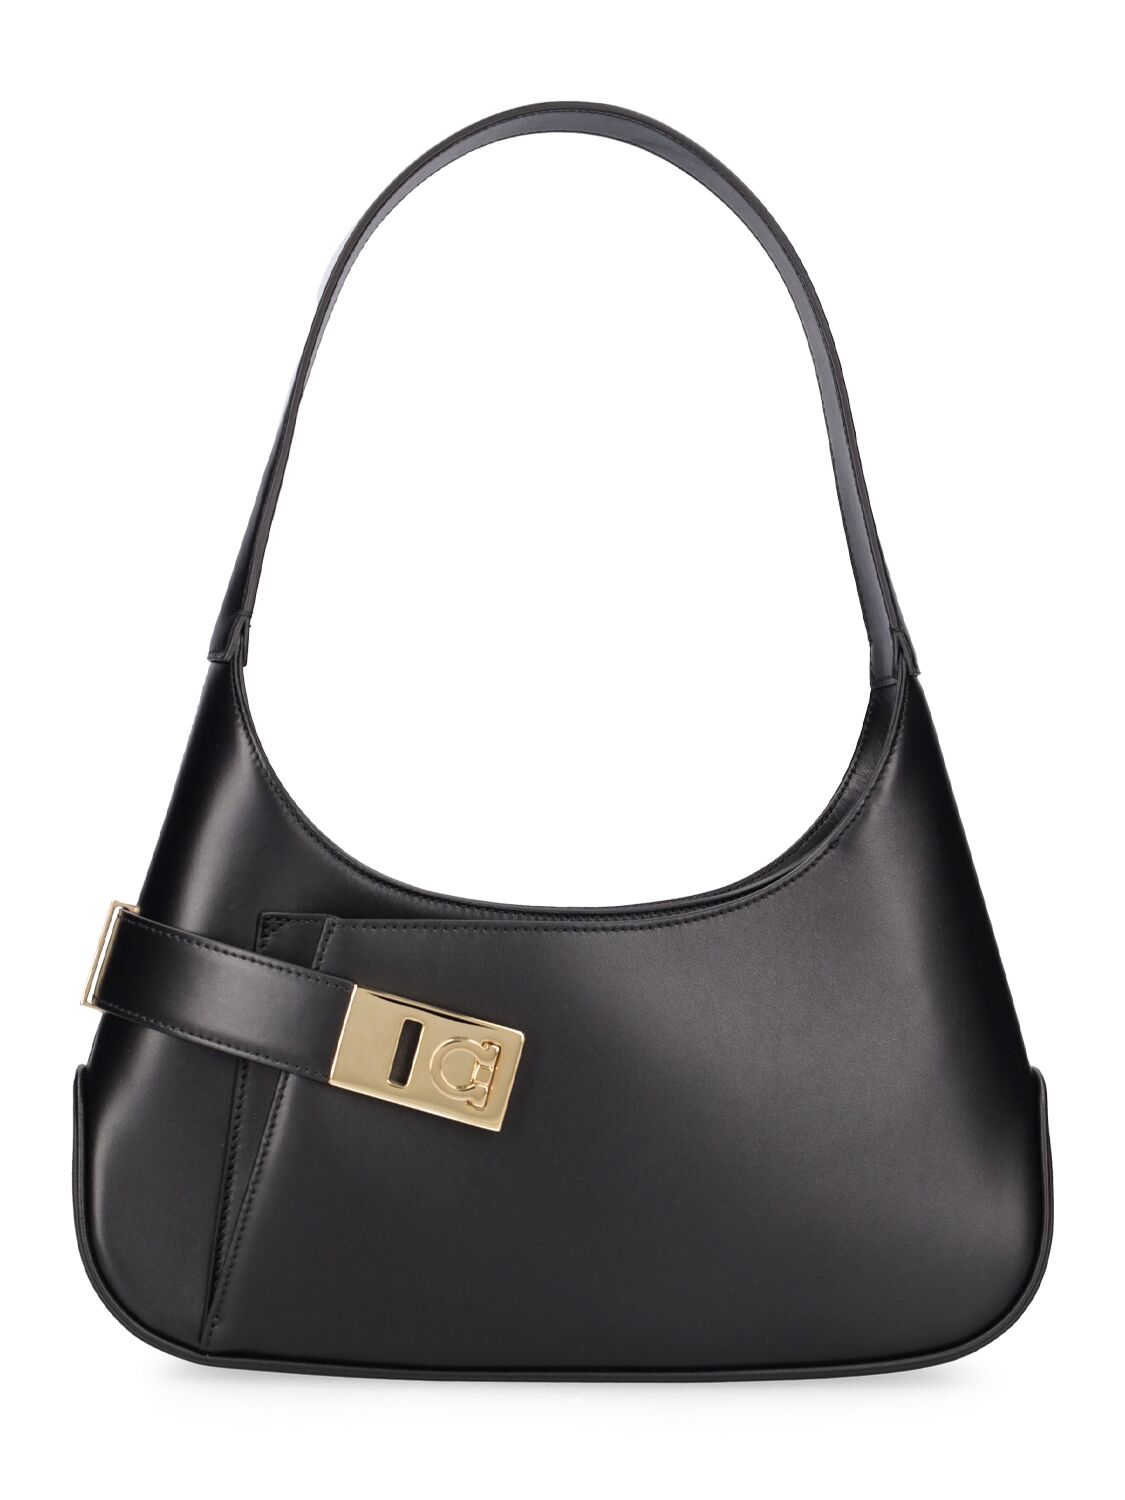 Ferragamo Medium Hobo Leather Shoulder Bag In Black